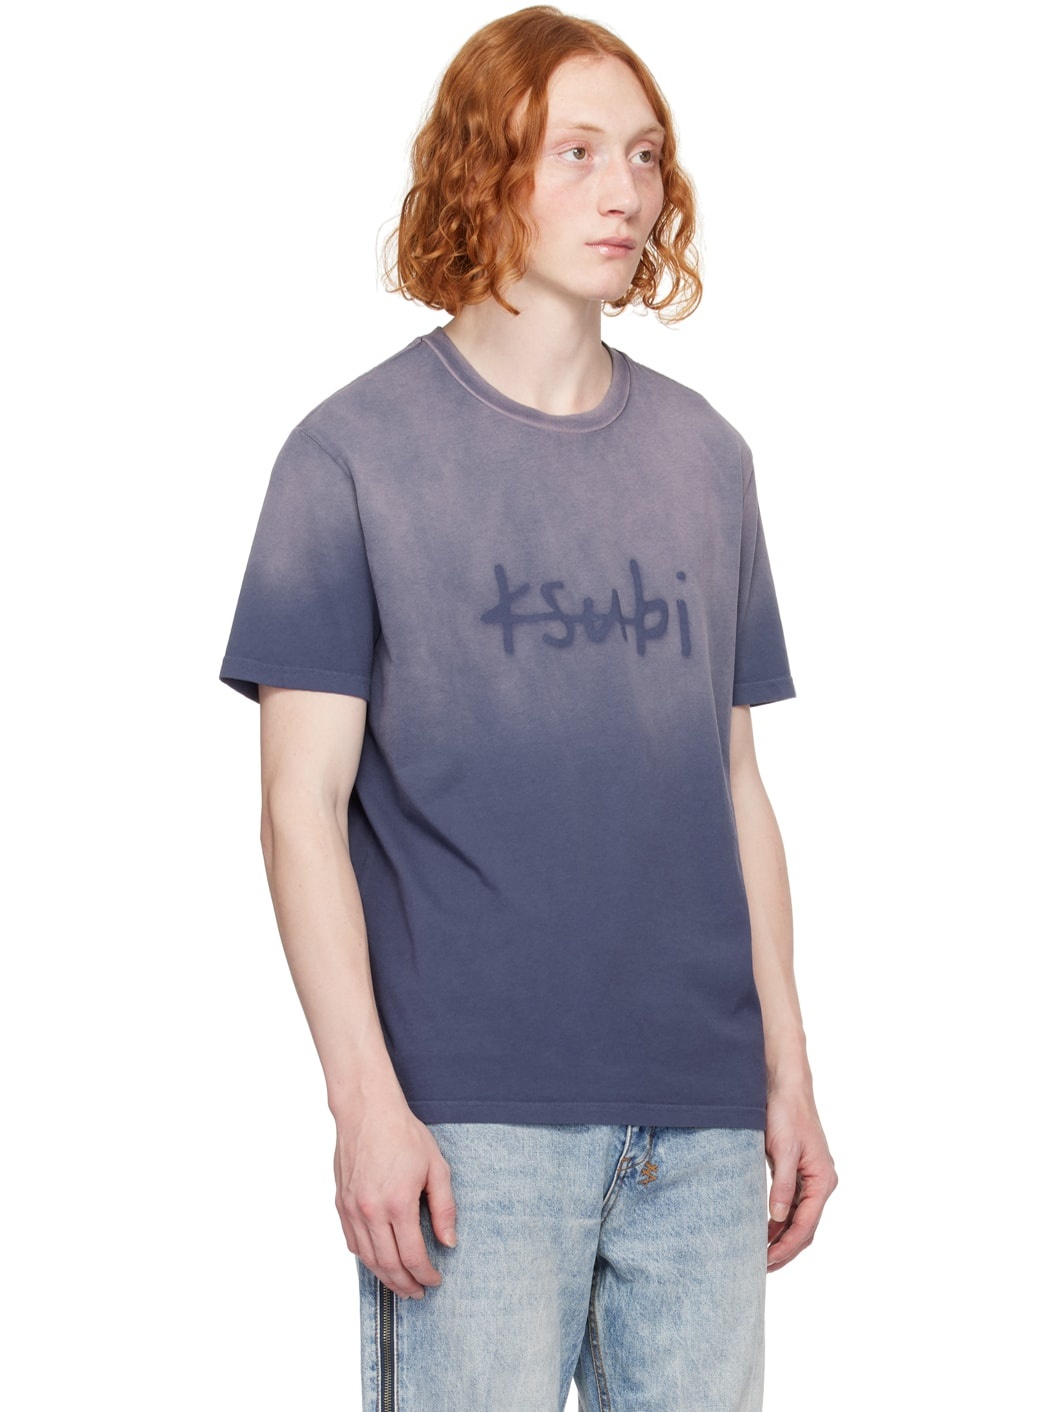 Purple Heritage Kash T-Shirt - 2